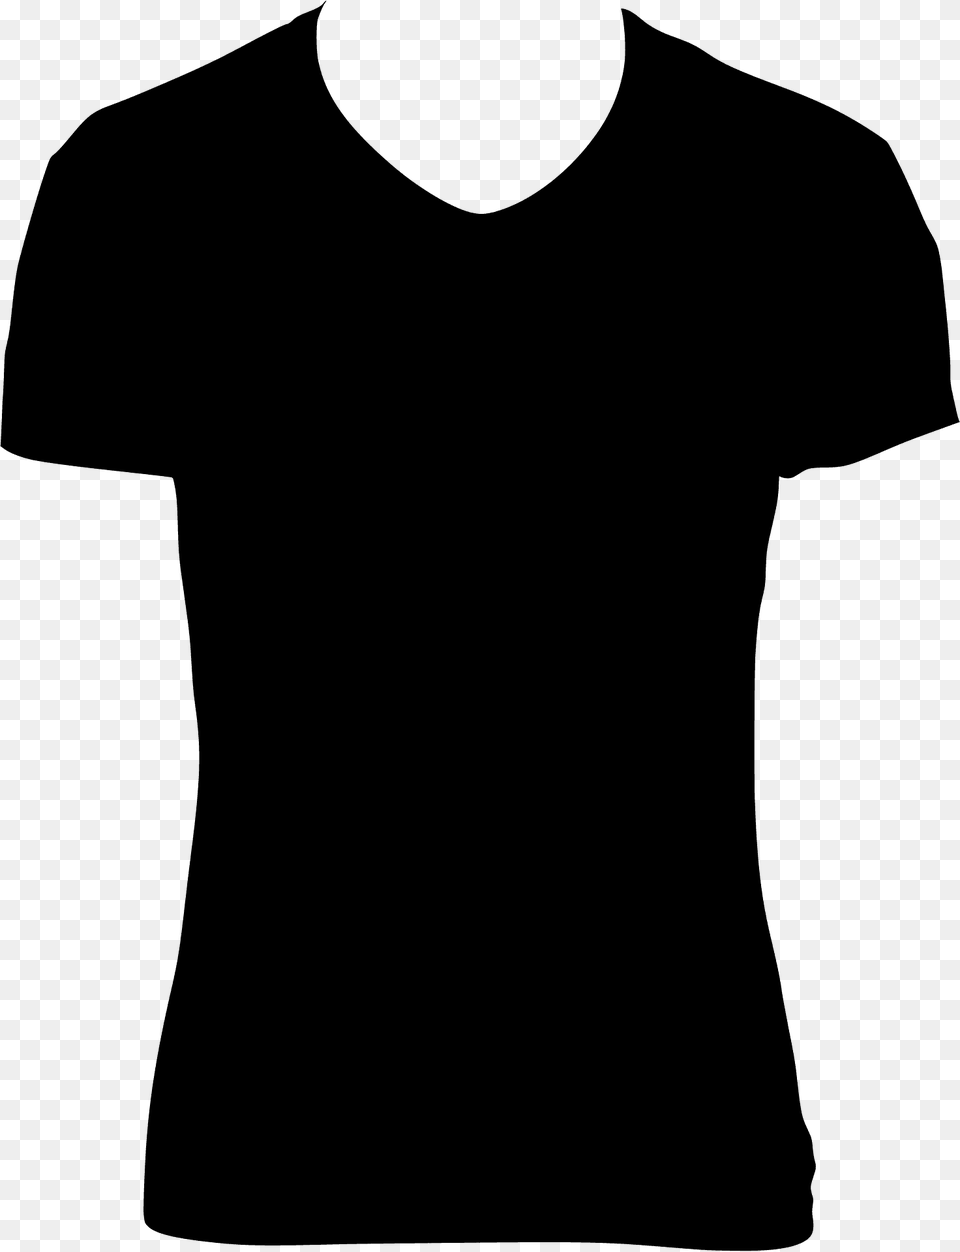 V Neck T Shirt Silhouette, Clothing, T-shirt Png